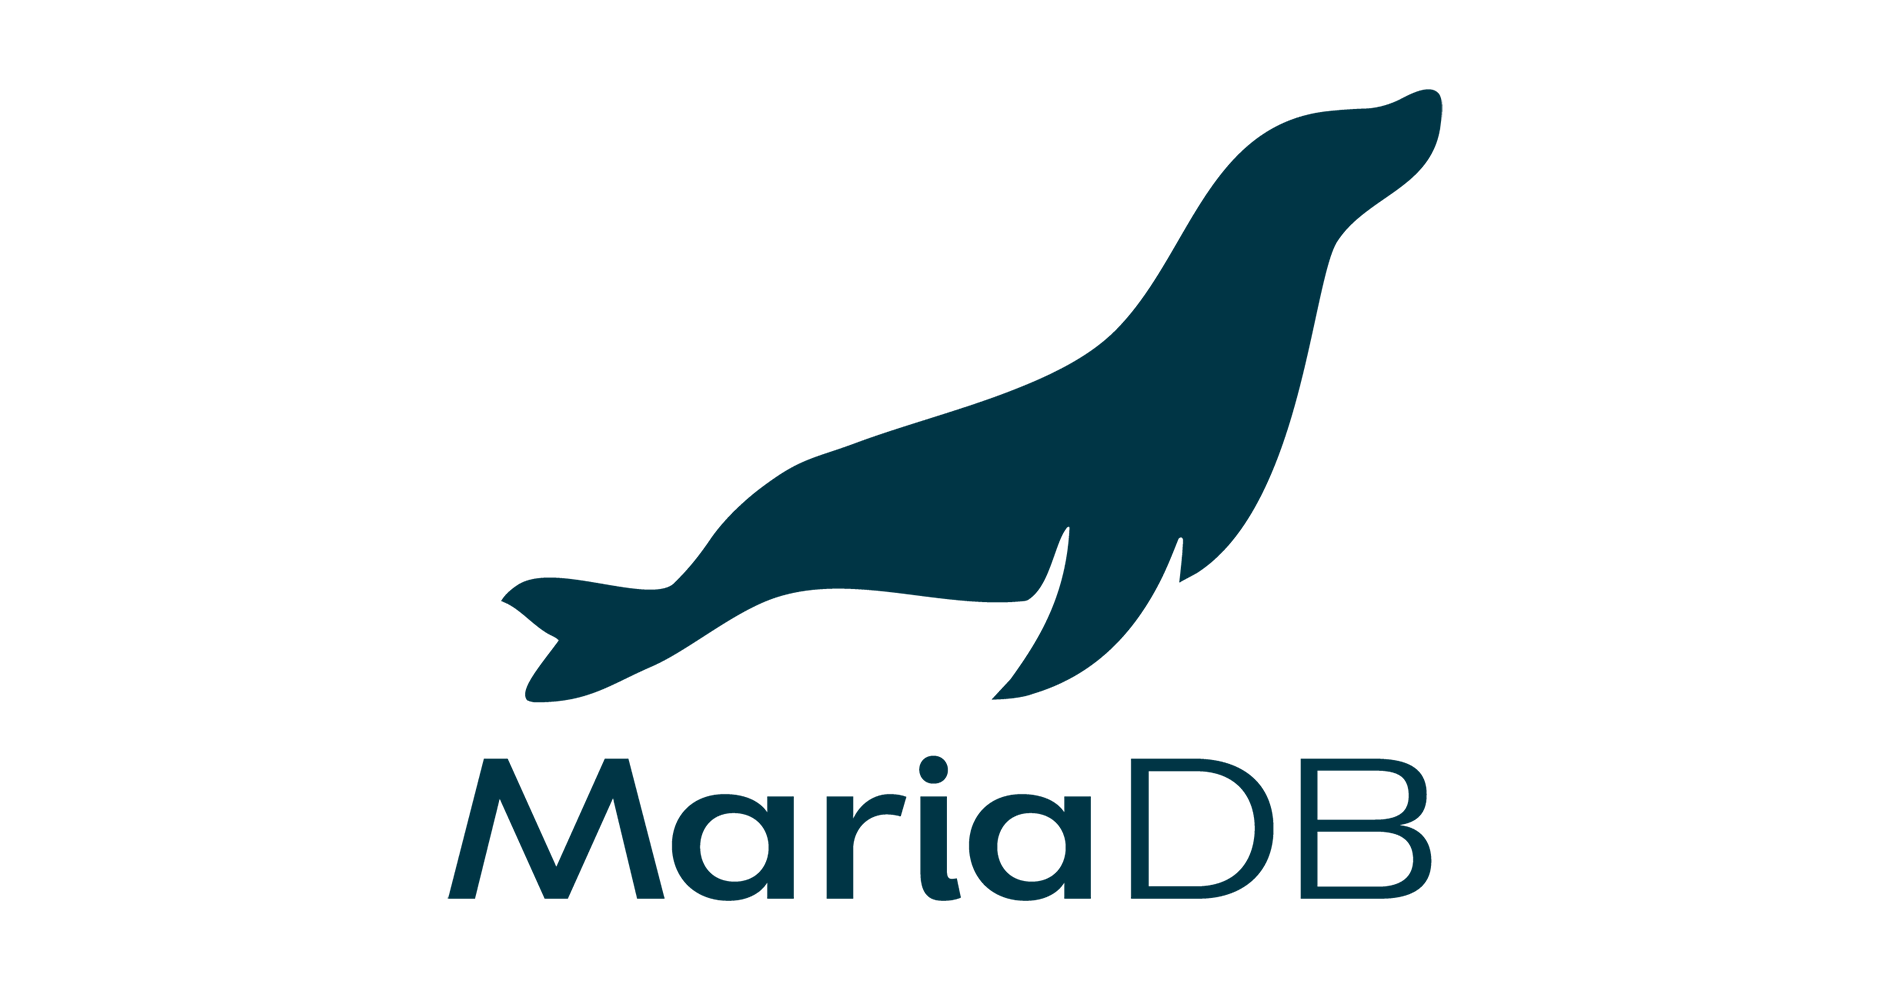 Using MariaDB in an ASP.NET Core API with Entity Framework Core